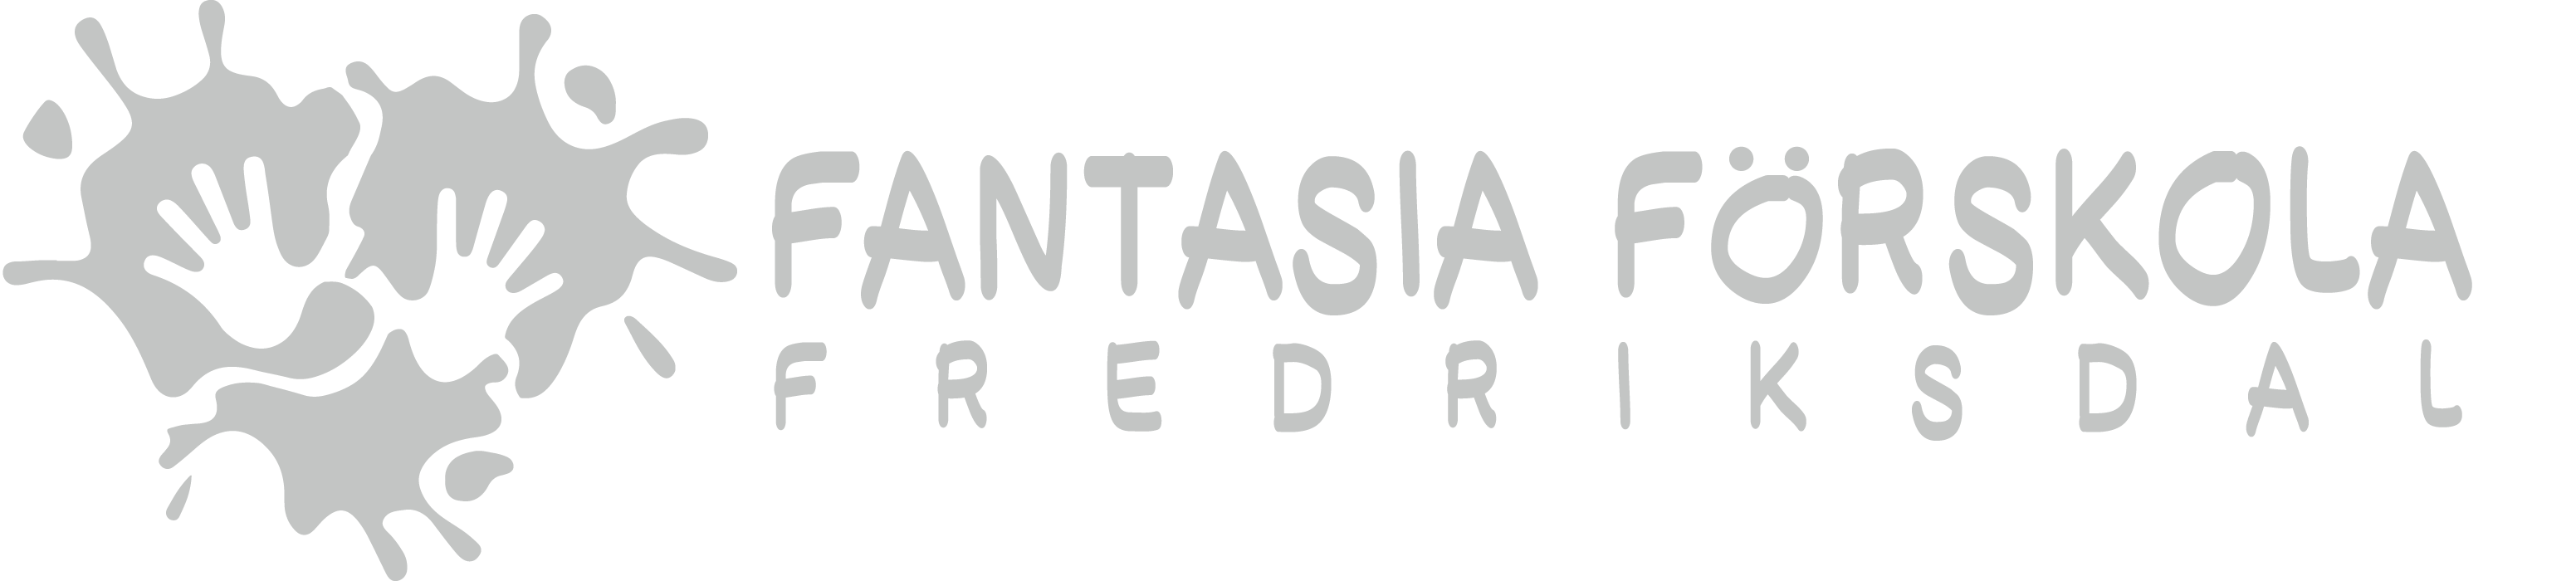 Fantasia Förskola Fredriksdal - Helsingborg